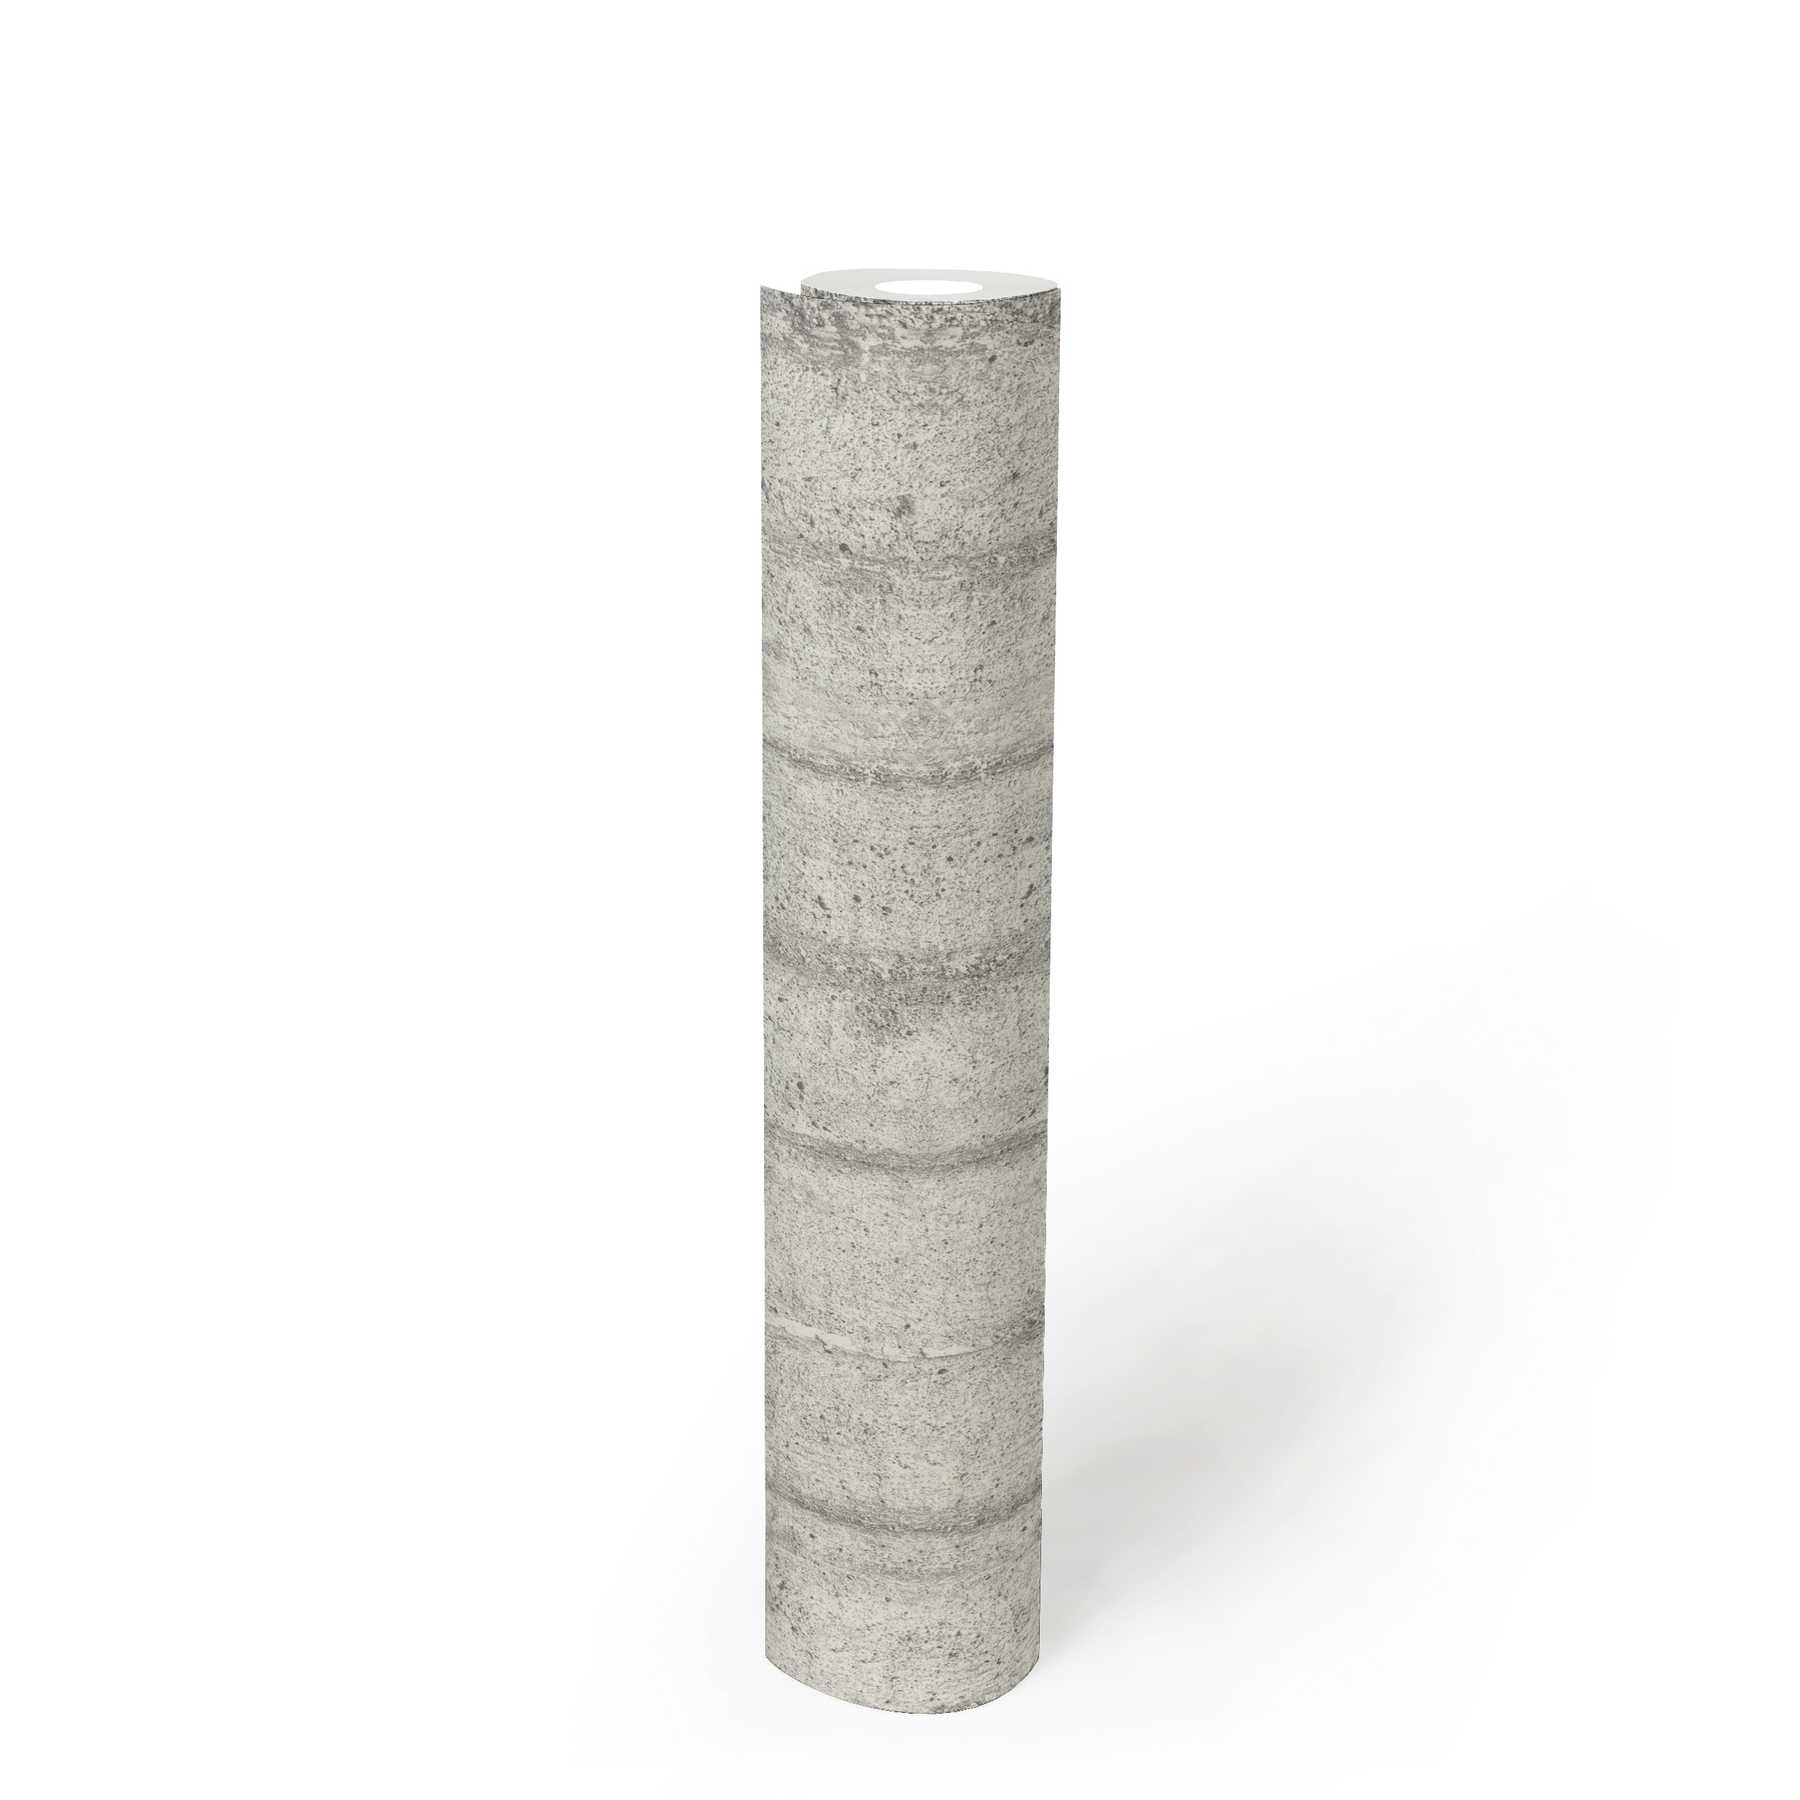             Concrete look wallpaper, rough shuttering concrete - grey
        